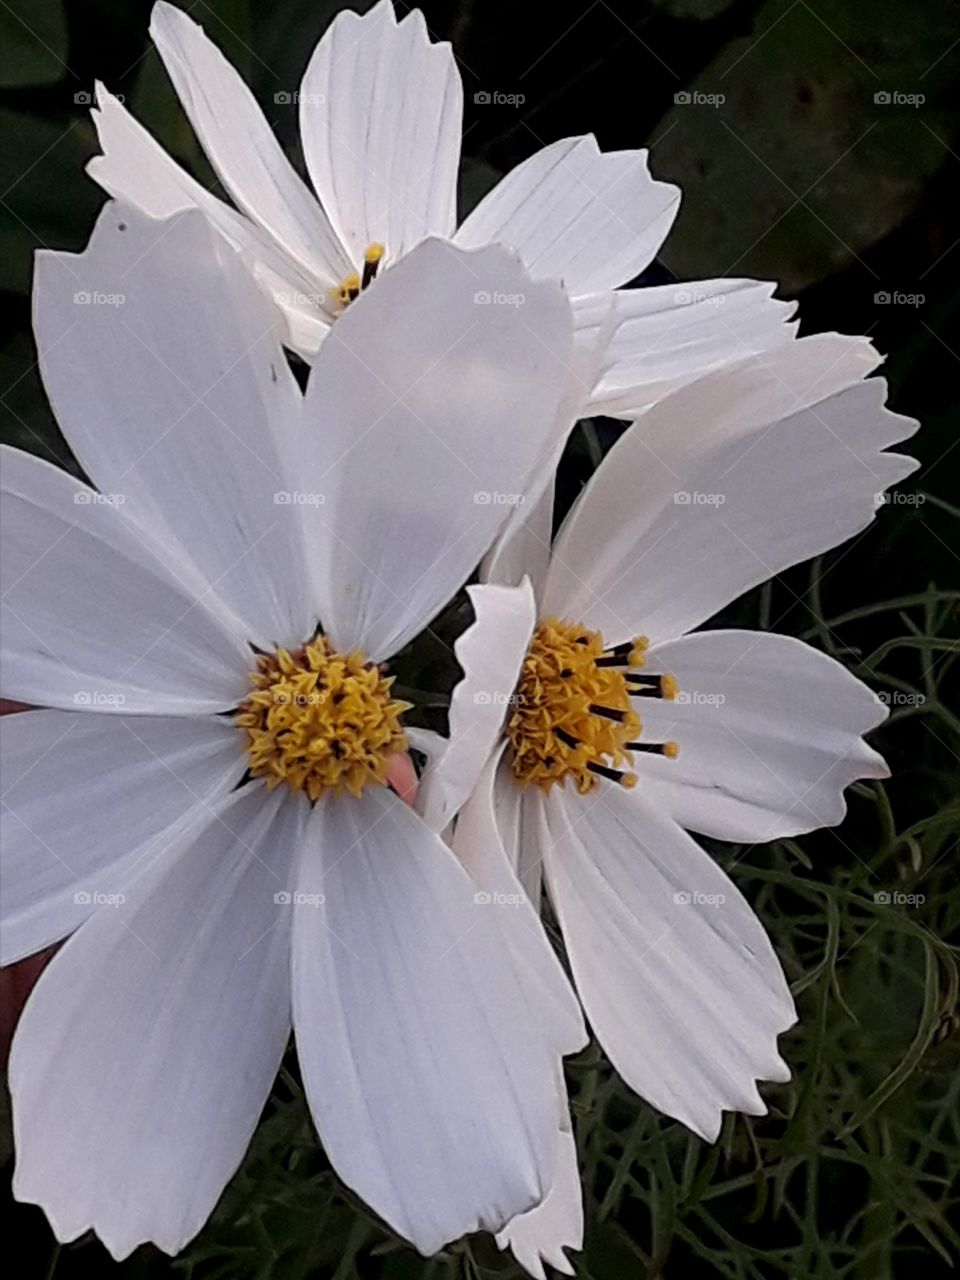 Tripled white flowers